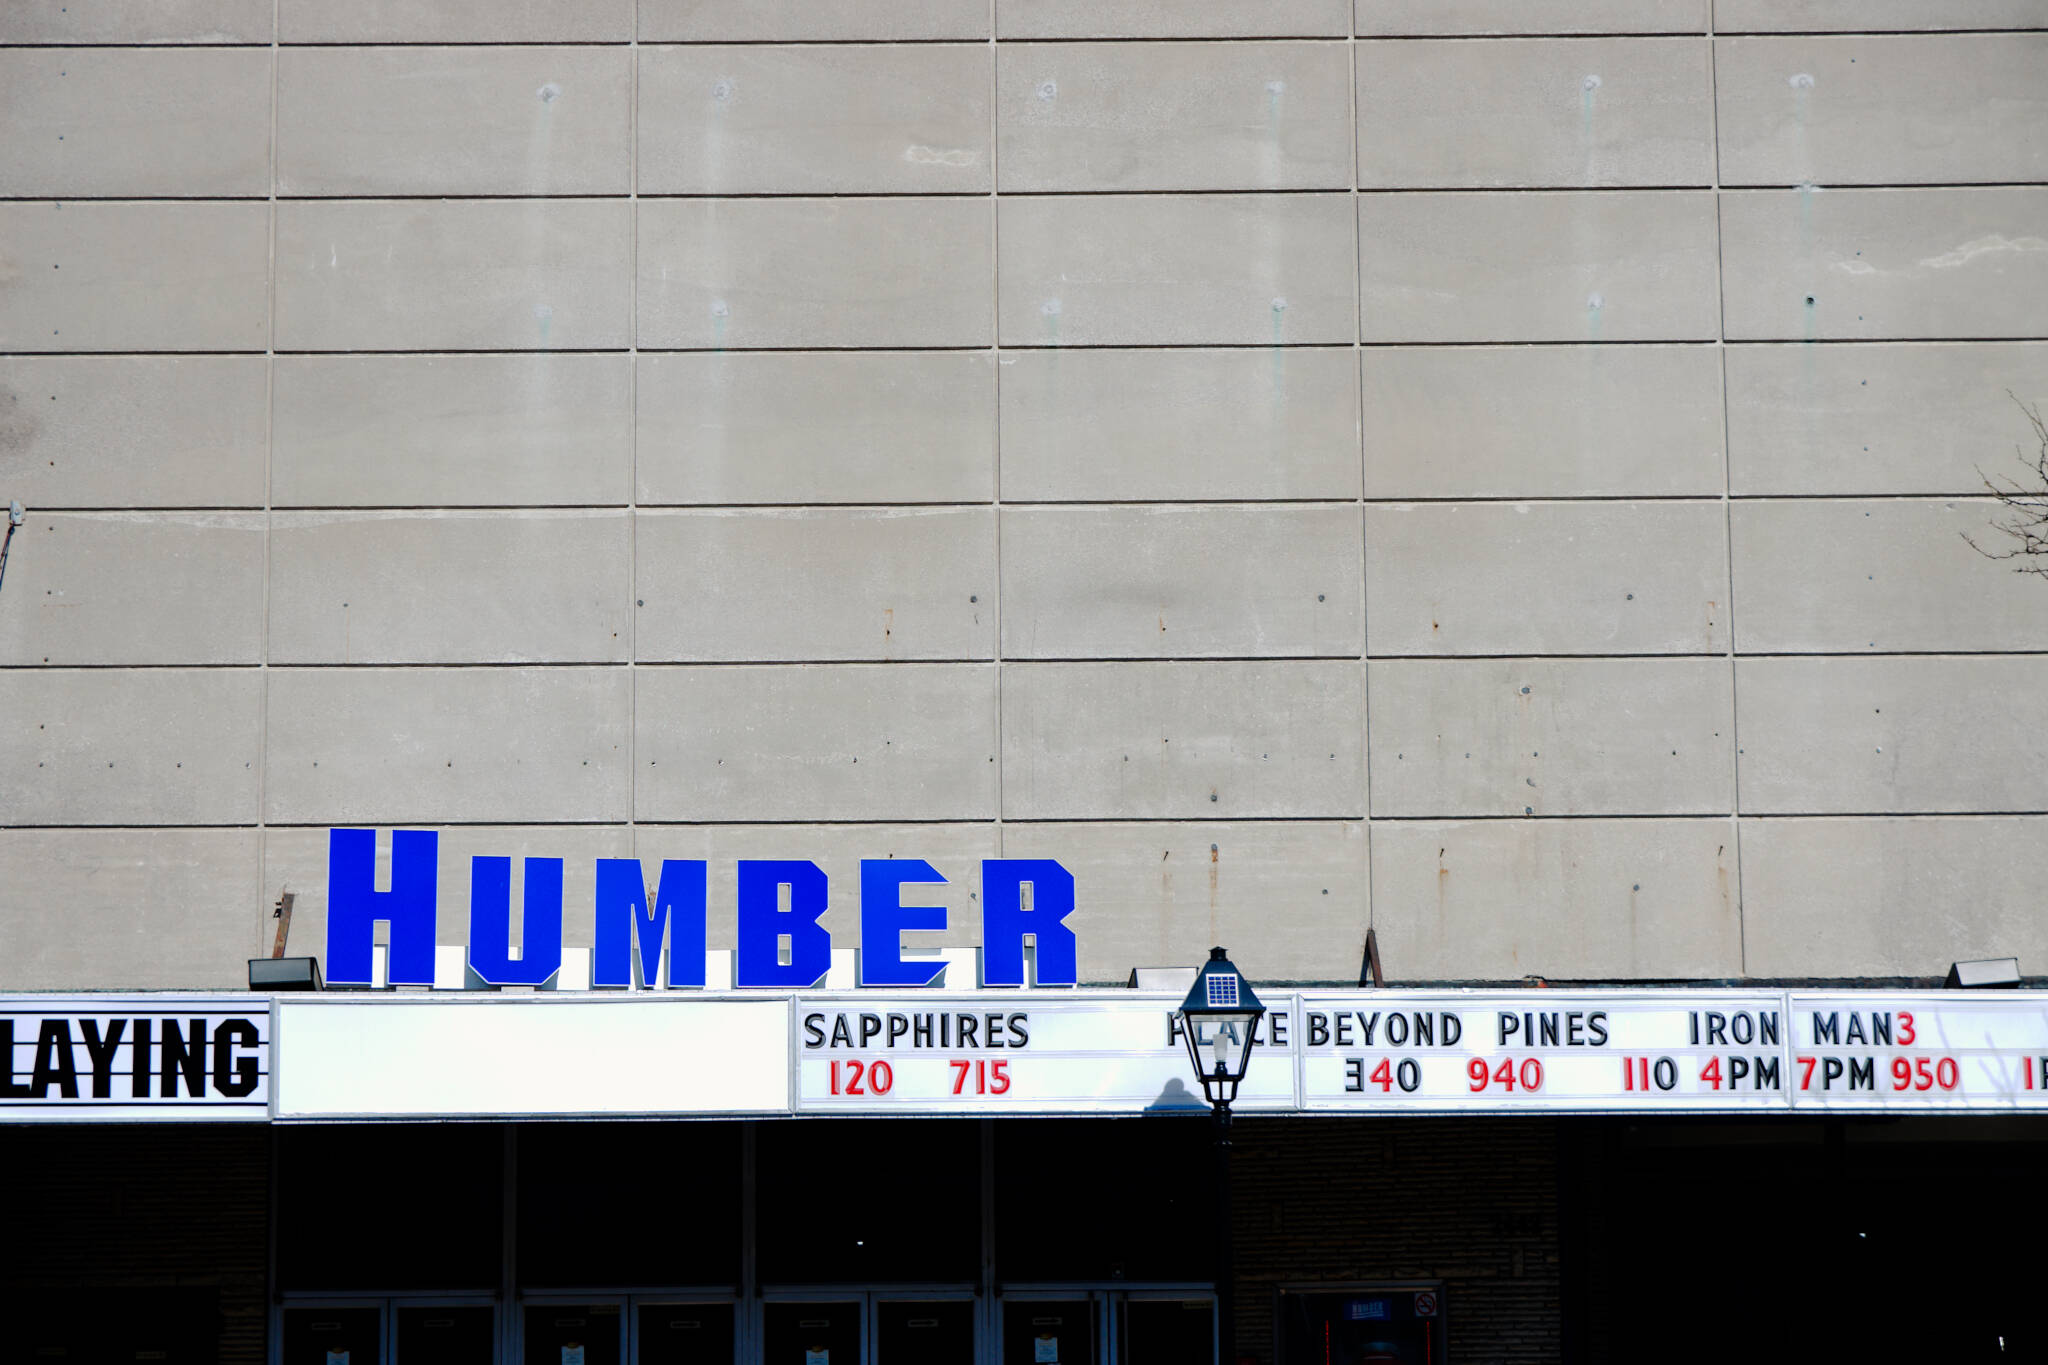 Humber Cinema